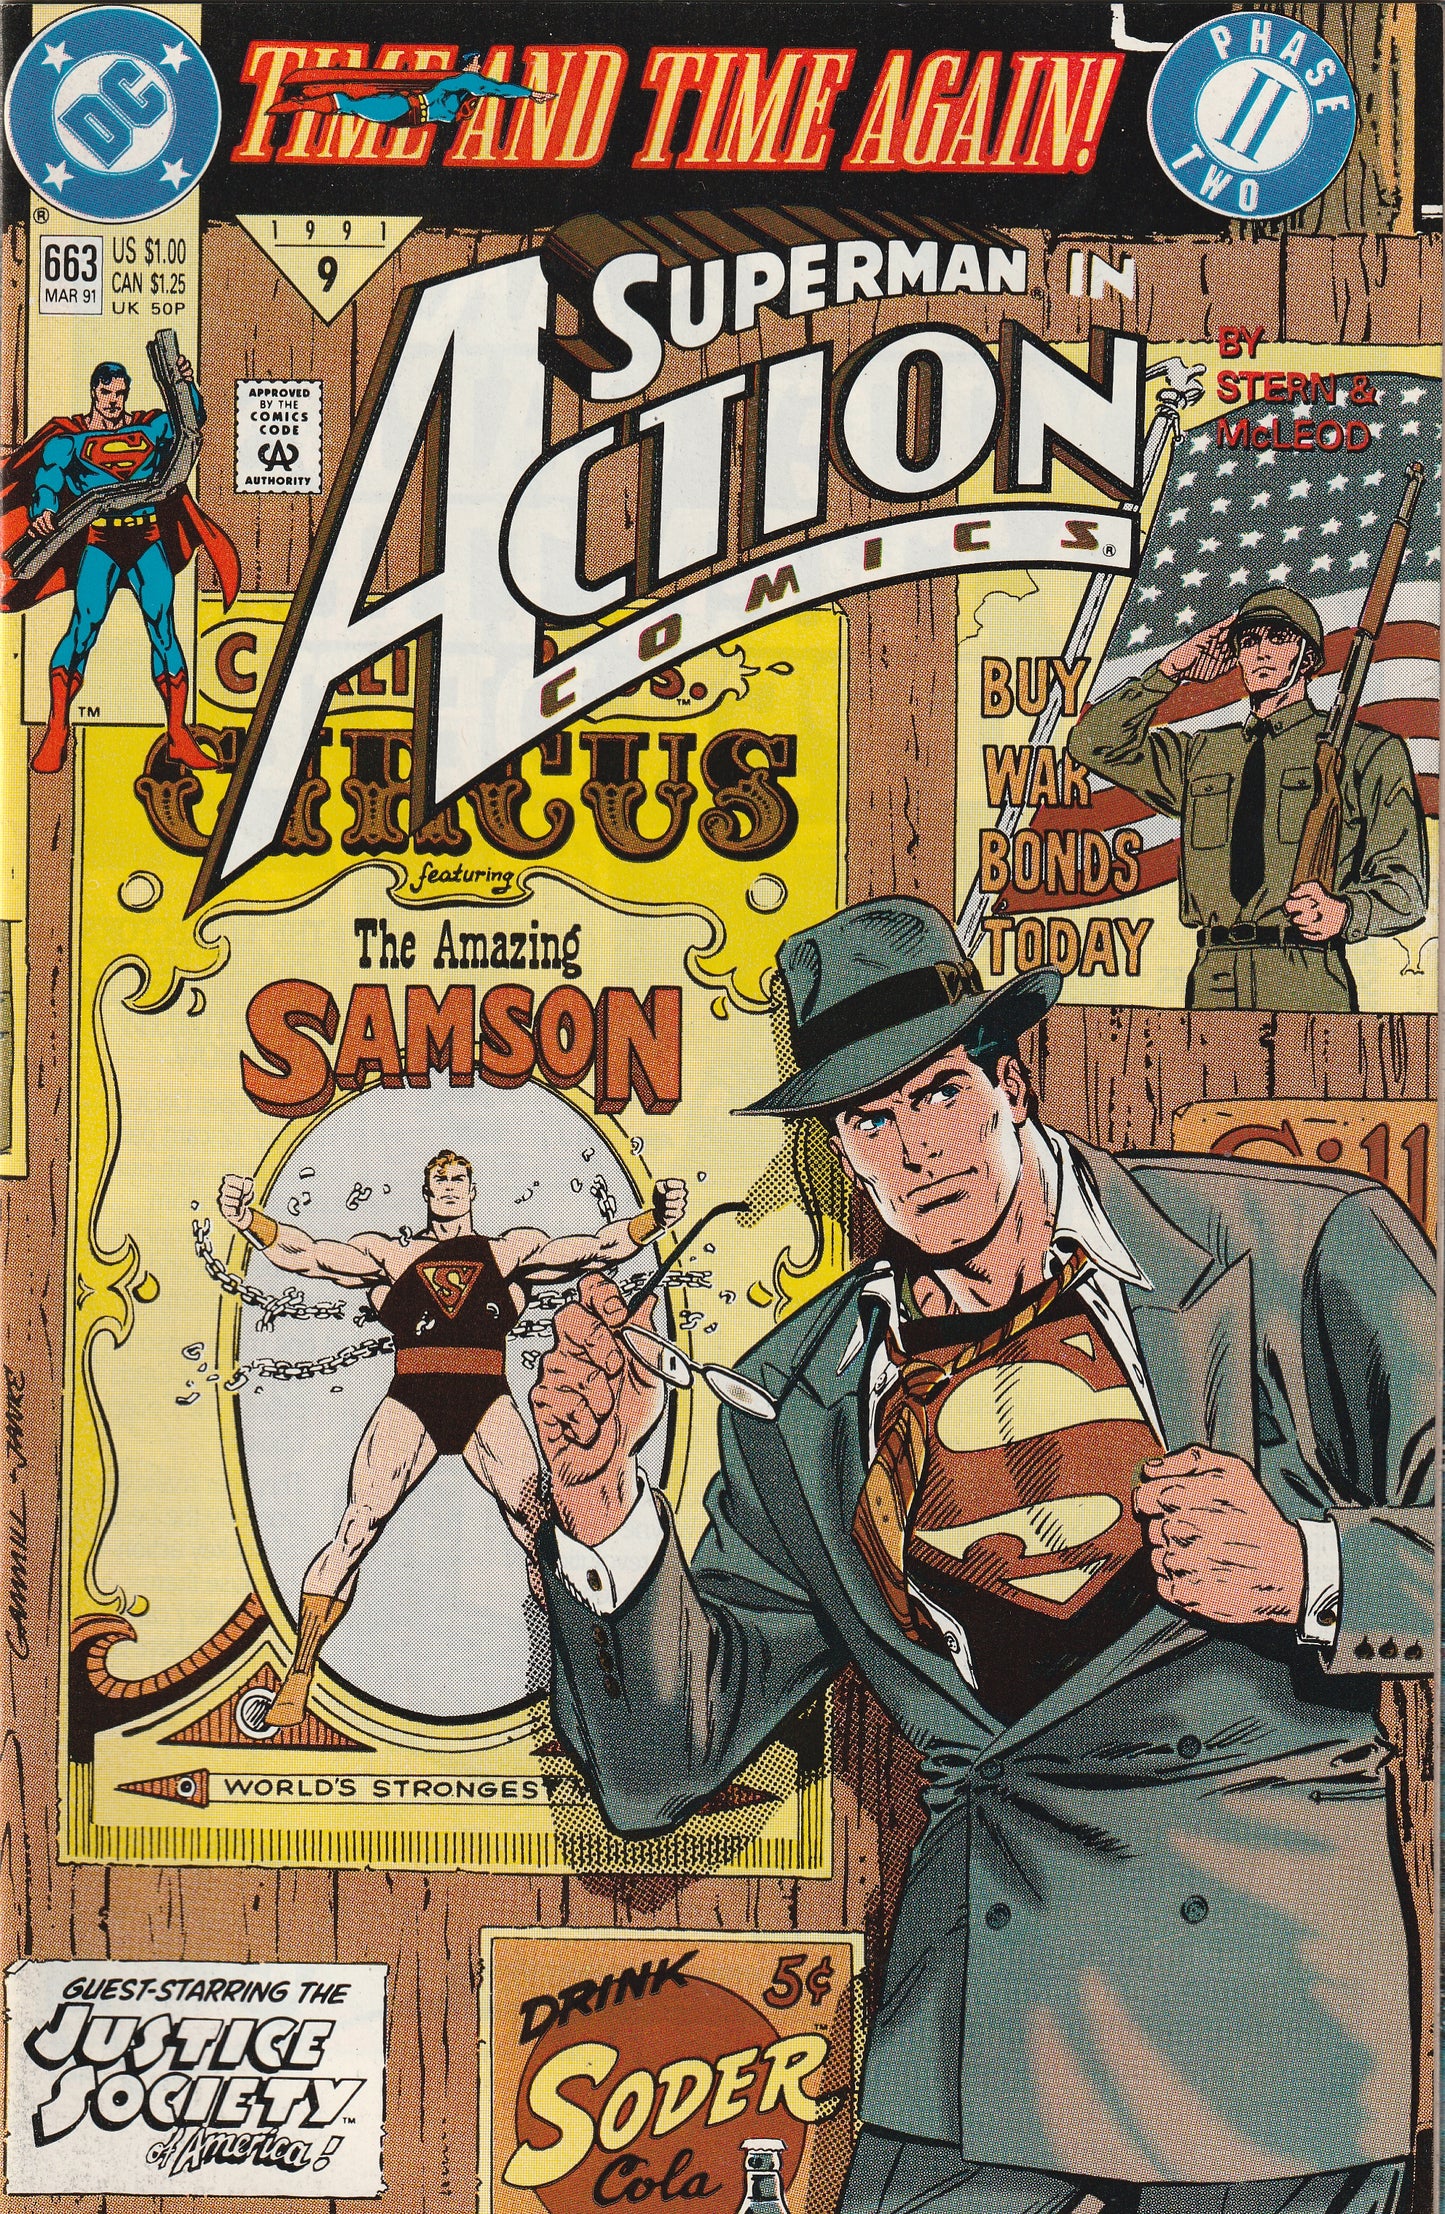 Action Comics #663 (1991)